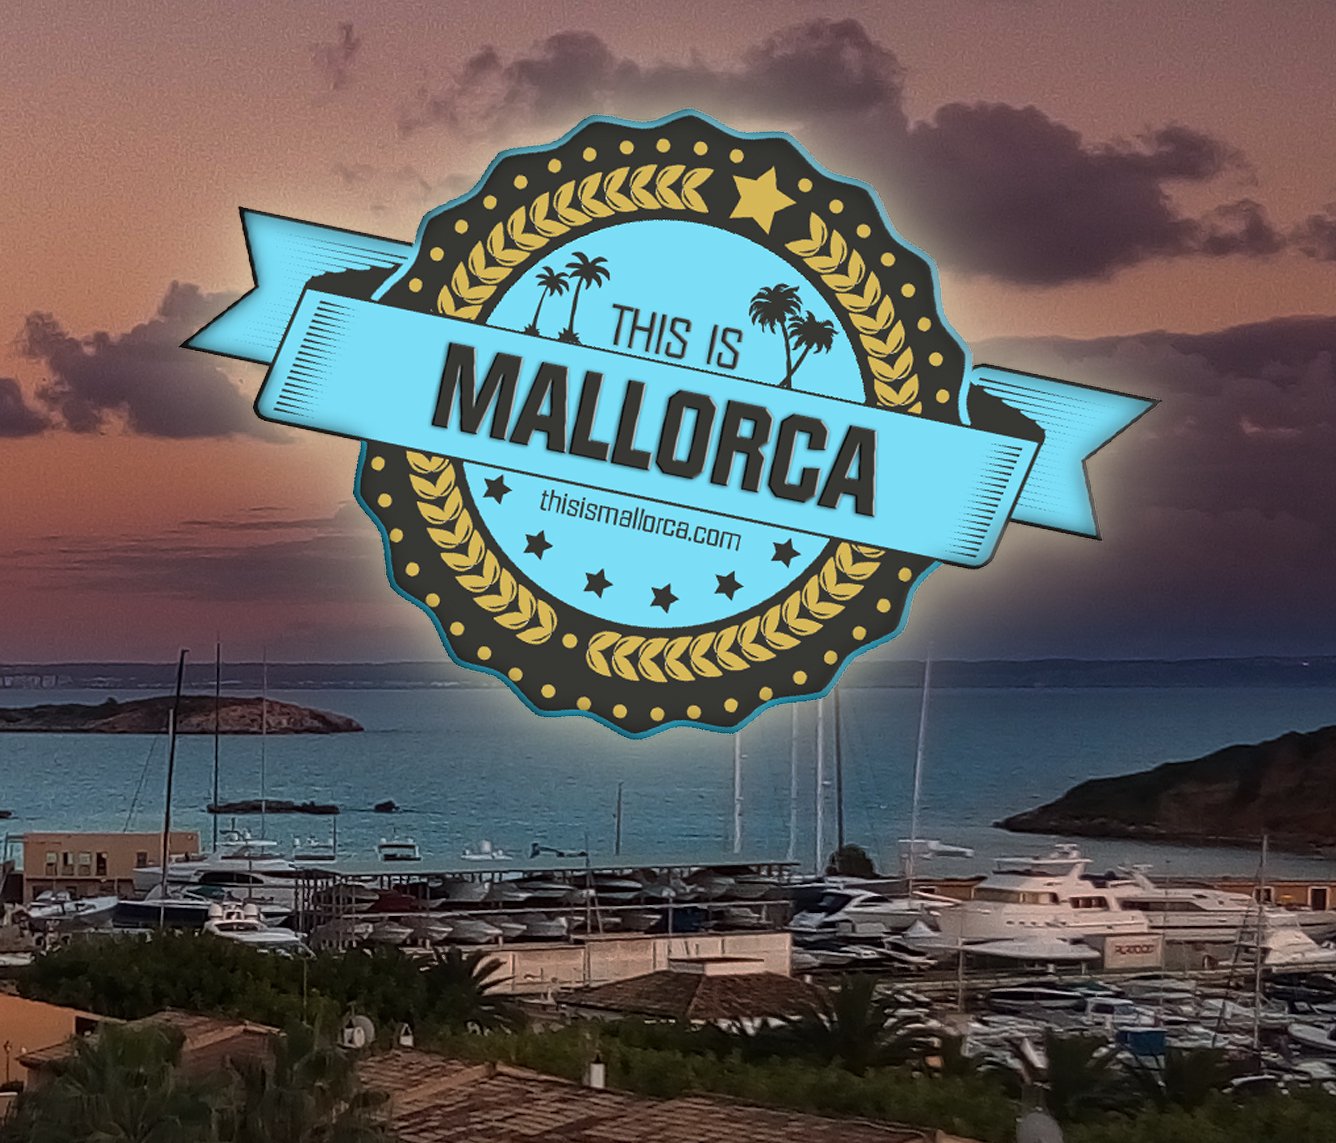 This is Mallorca

https://t.co/vkbovdZ8bj